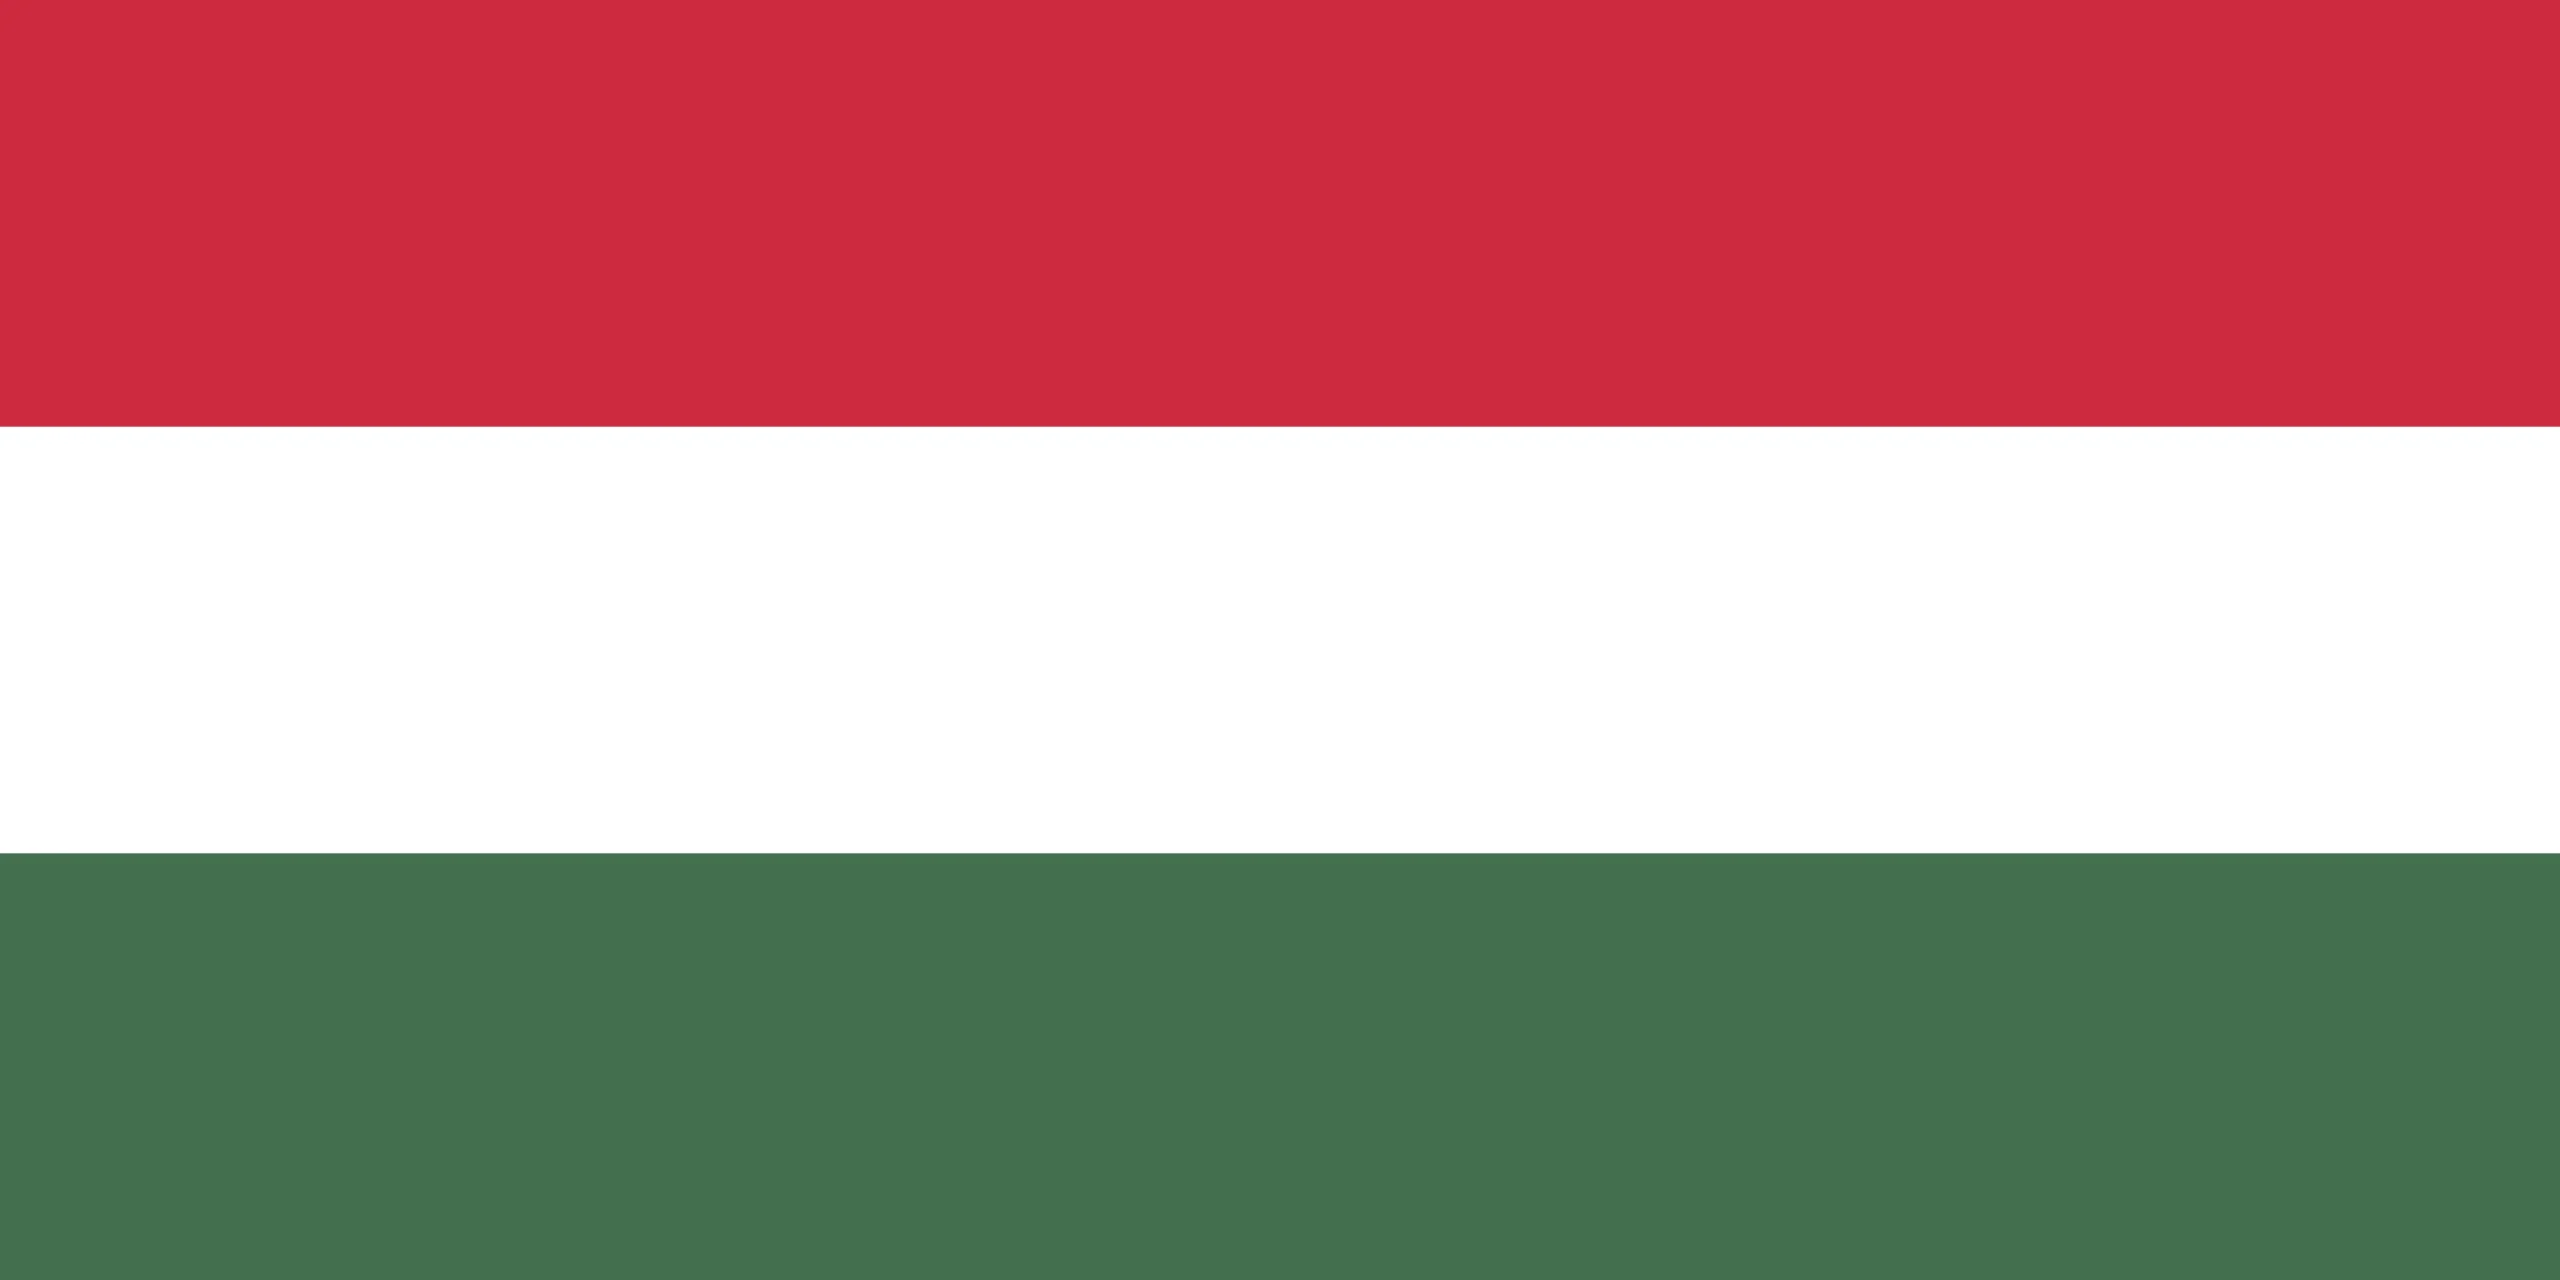 Bulk SMS Hungary